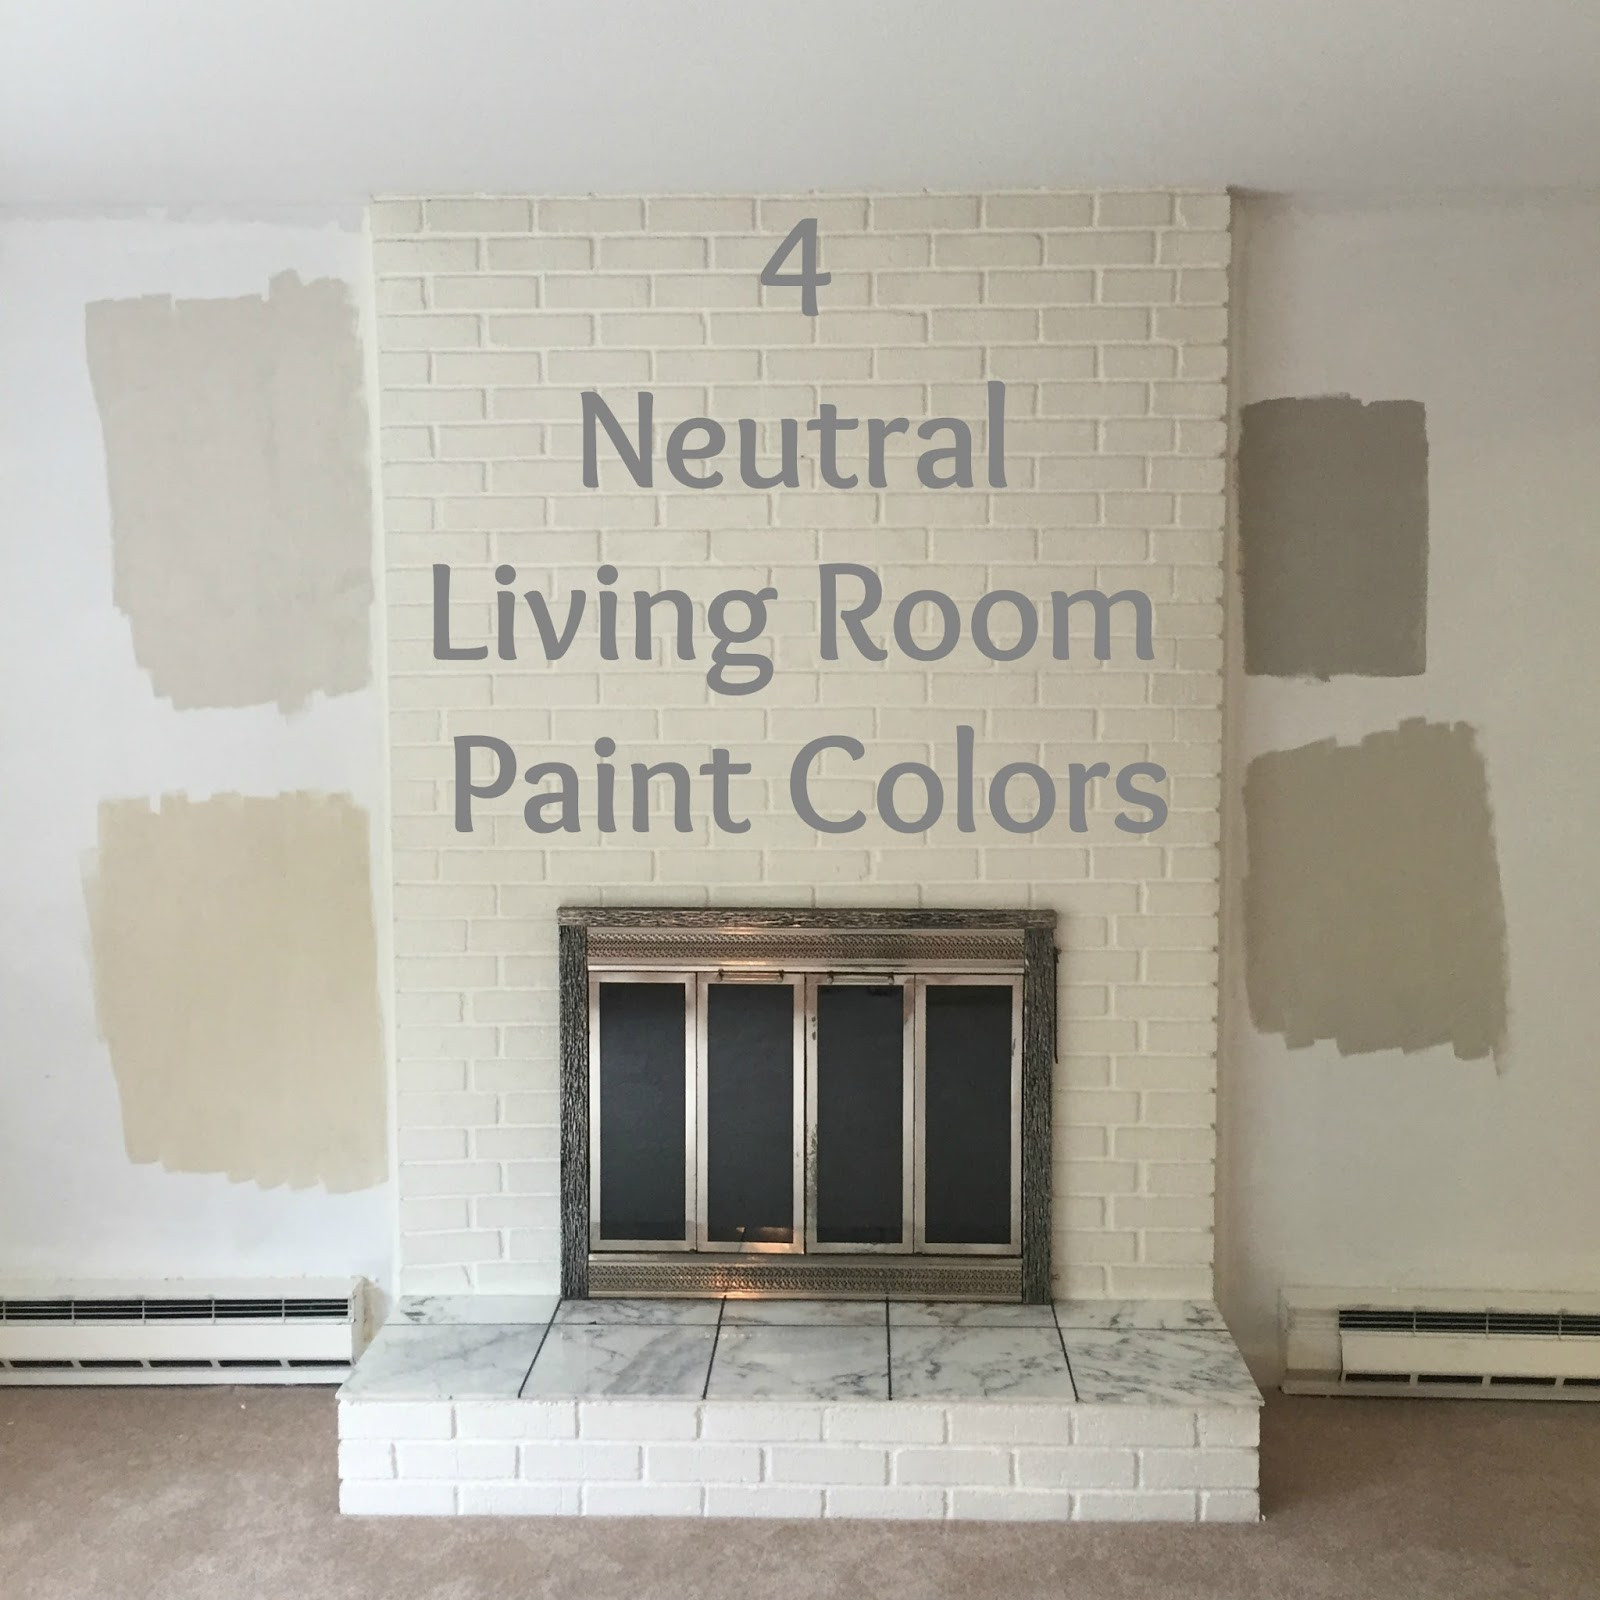 Neutral Color Living Room
 Drew Danielle Design 4 Neutral Living Room Paint Colors